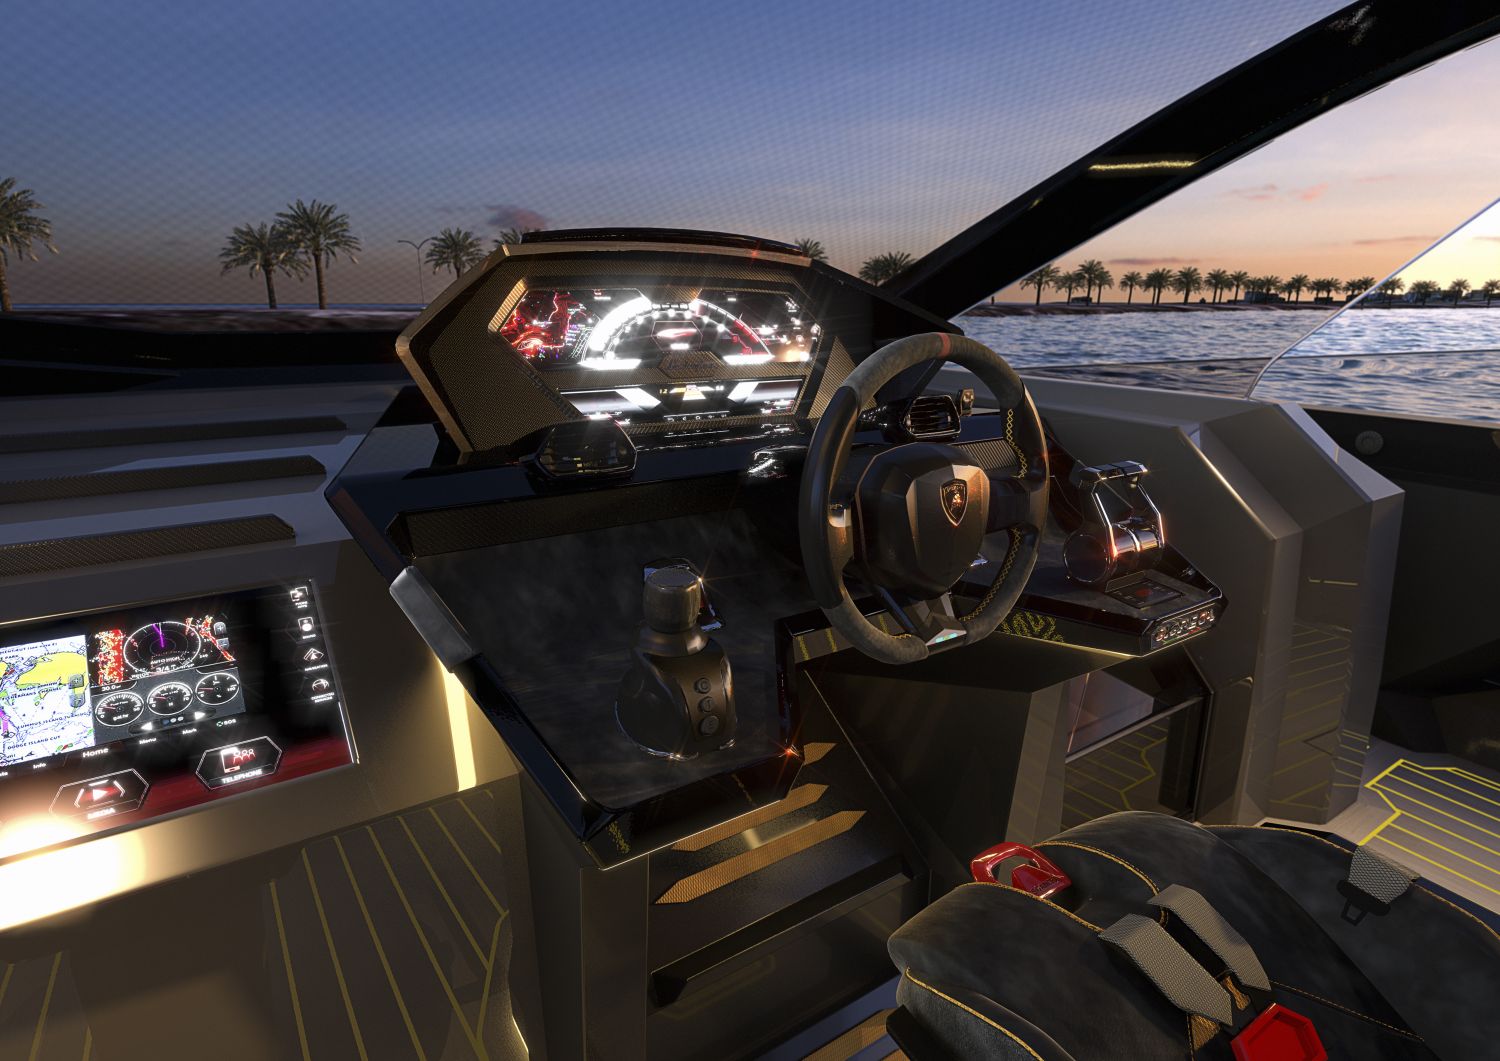 The Tecnomar for Lamborghini 63 Yacht is Your New Aquatic Ride